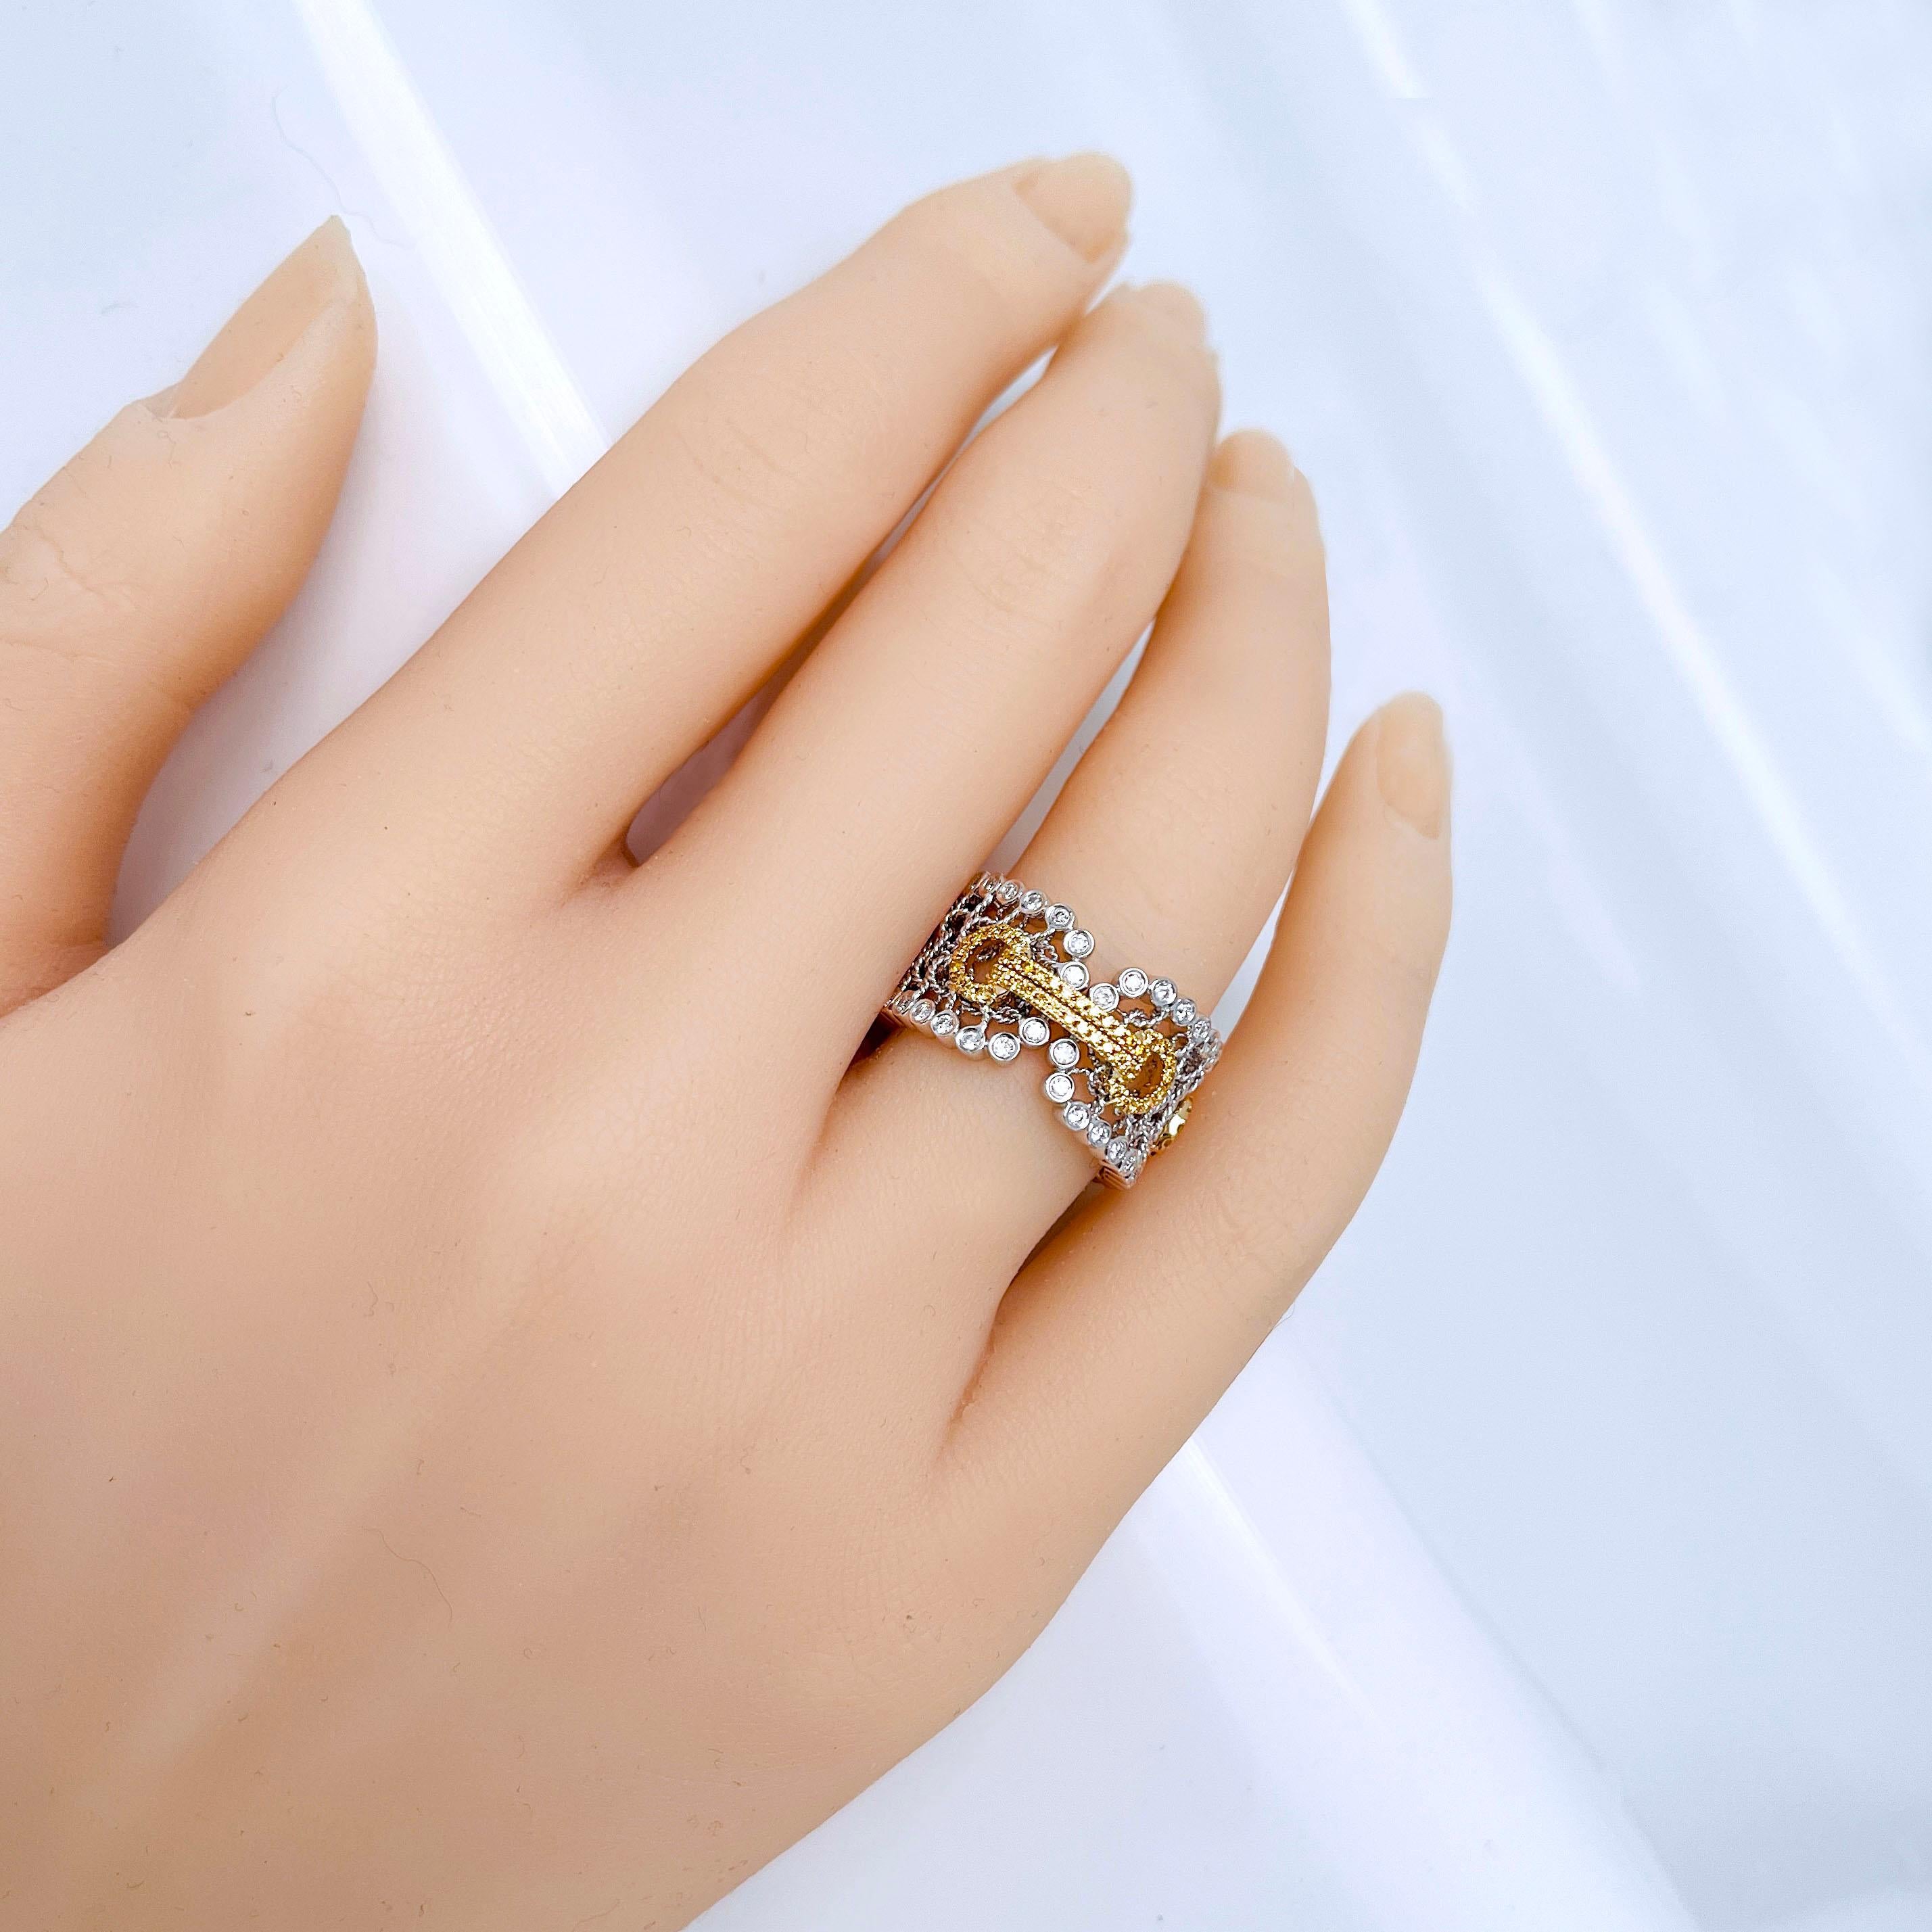 Buy 22k 22kt Gold Ring Indain Ring for Gift, Handmade Jewelry Online in  India - Etsy